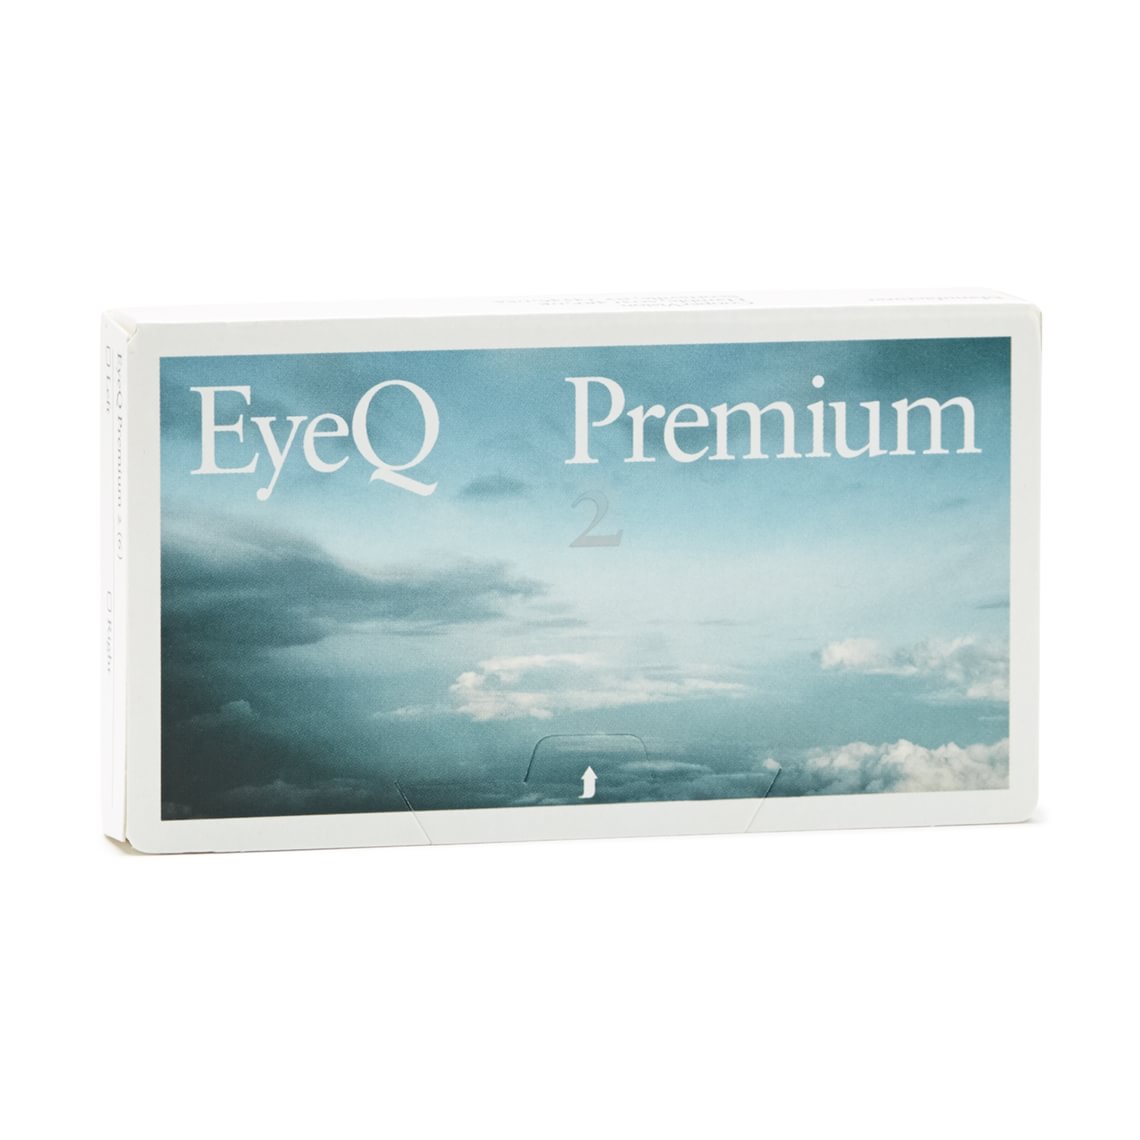 EyeQ Premium 2